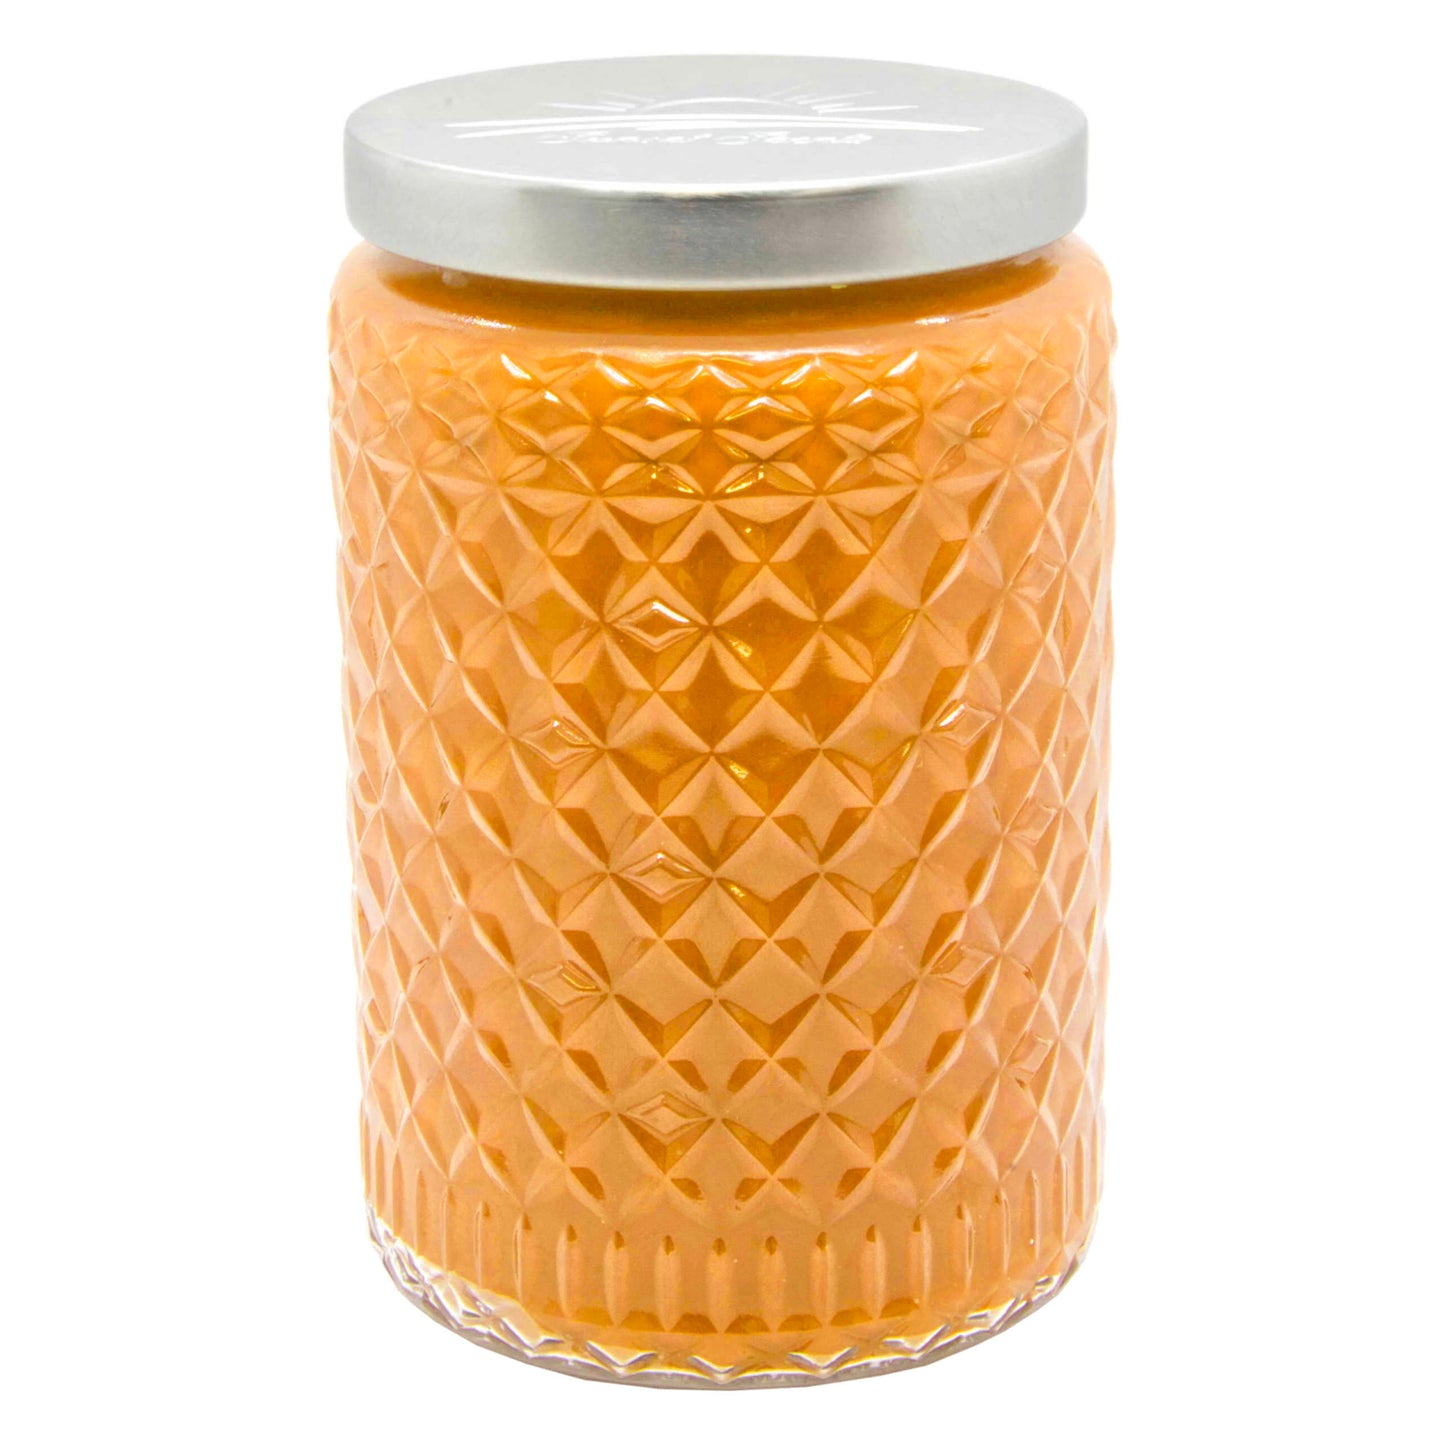 Orange Crush Scented Candle - large